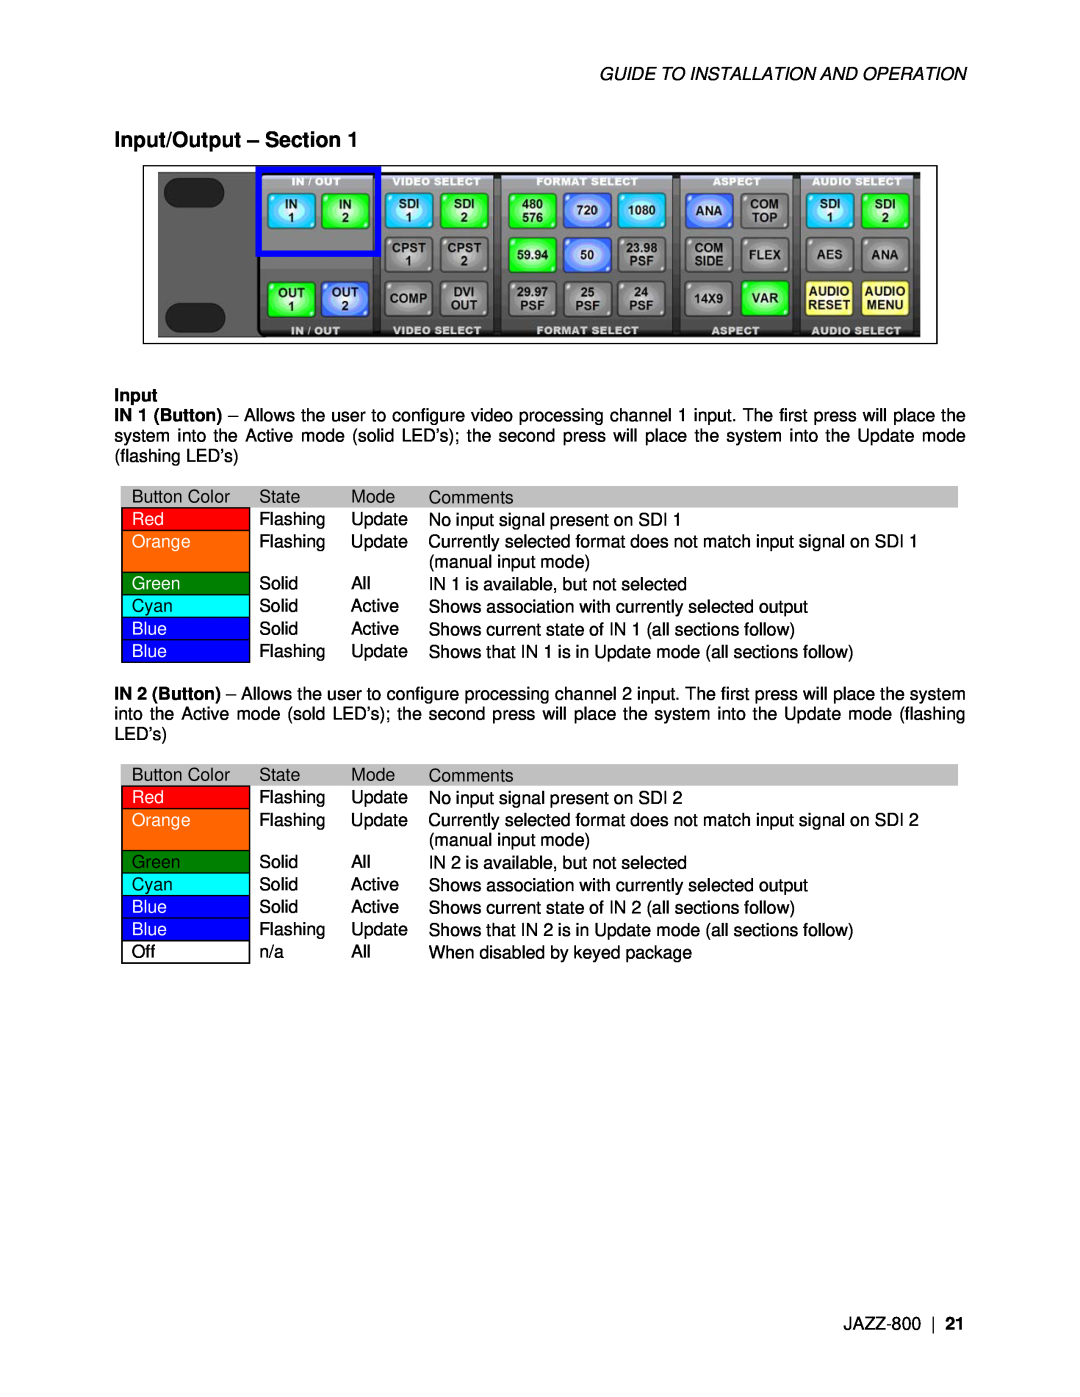 Miranda Camera Co JAZZ-800 manual Input/Output - Section, Red Orange Green, Blue Blue 